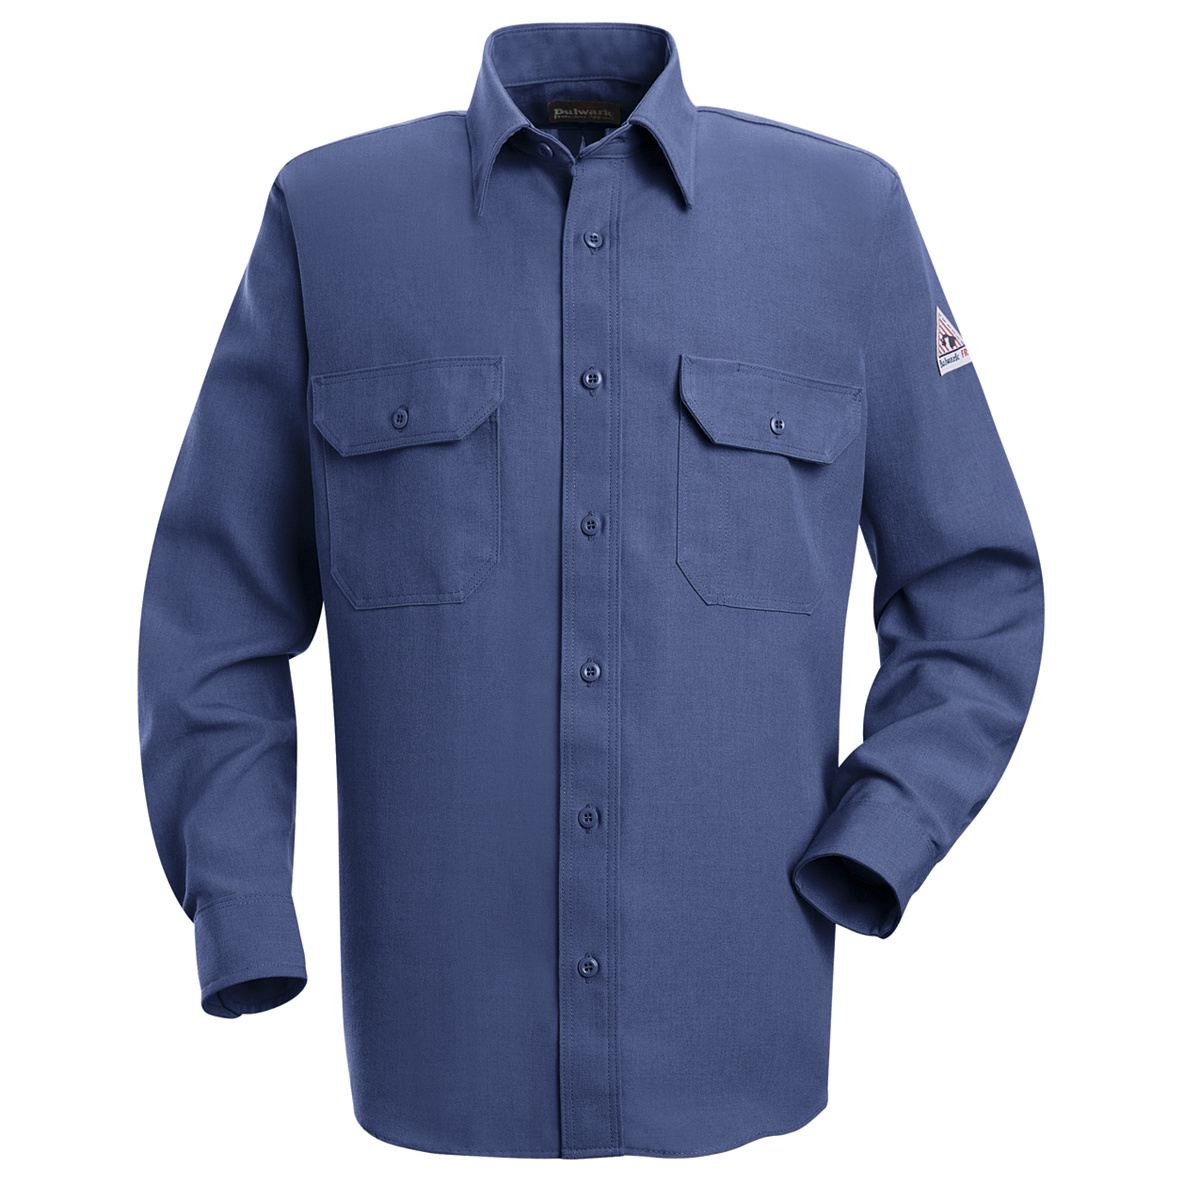 Bulwark® 2X Tall Gulf Blue Nomex® IIIA/Nomex® Aramid/Kevlar® Aramid Flame Resistant Uniform Shirt With Button Front Closure